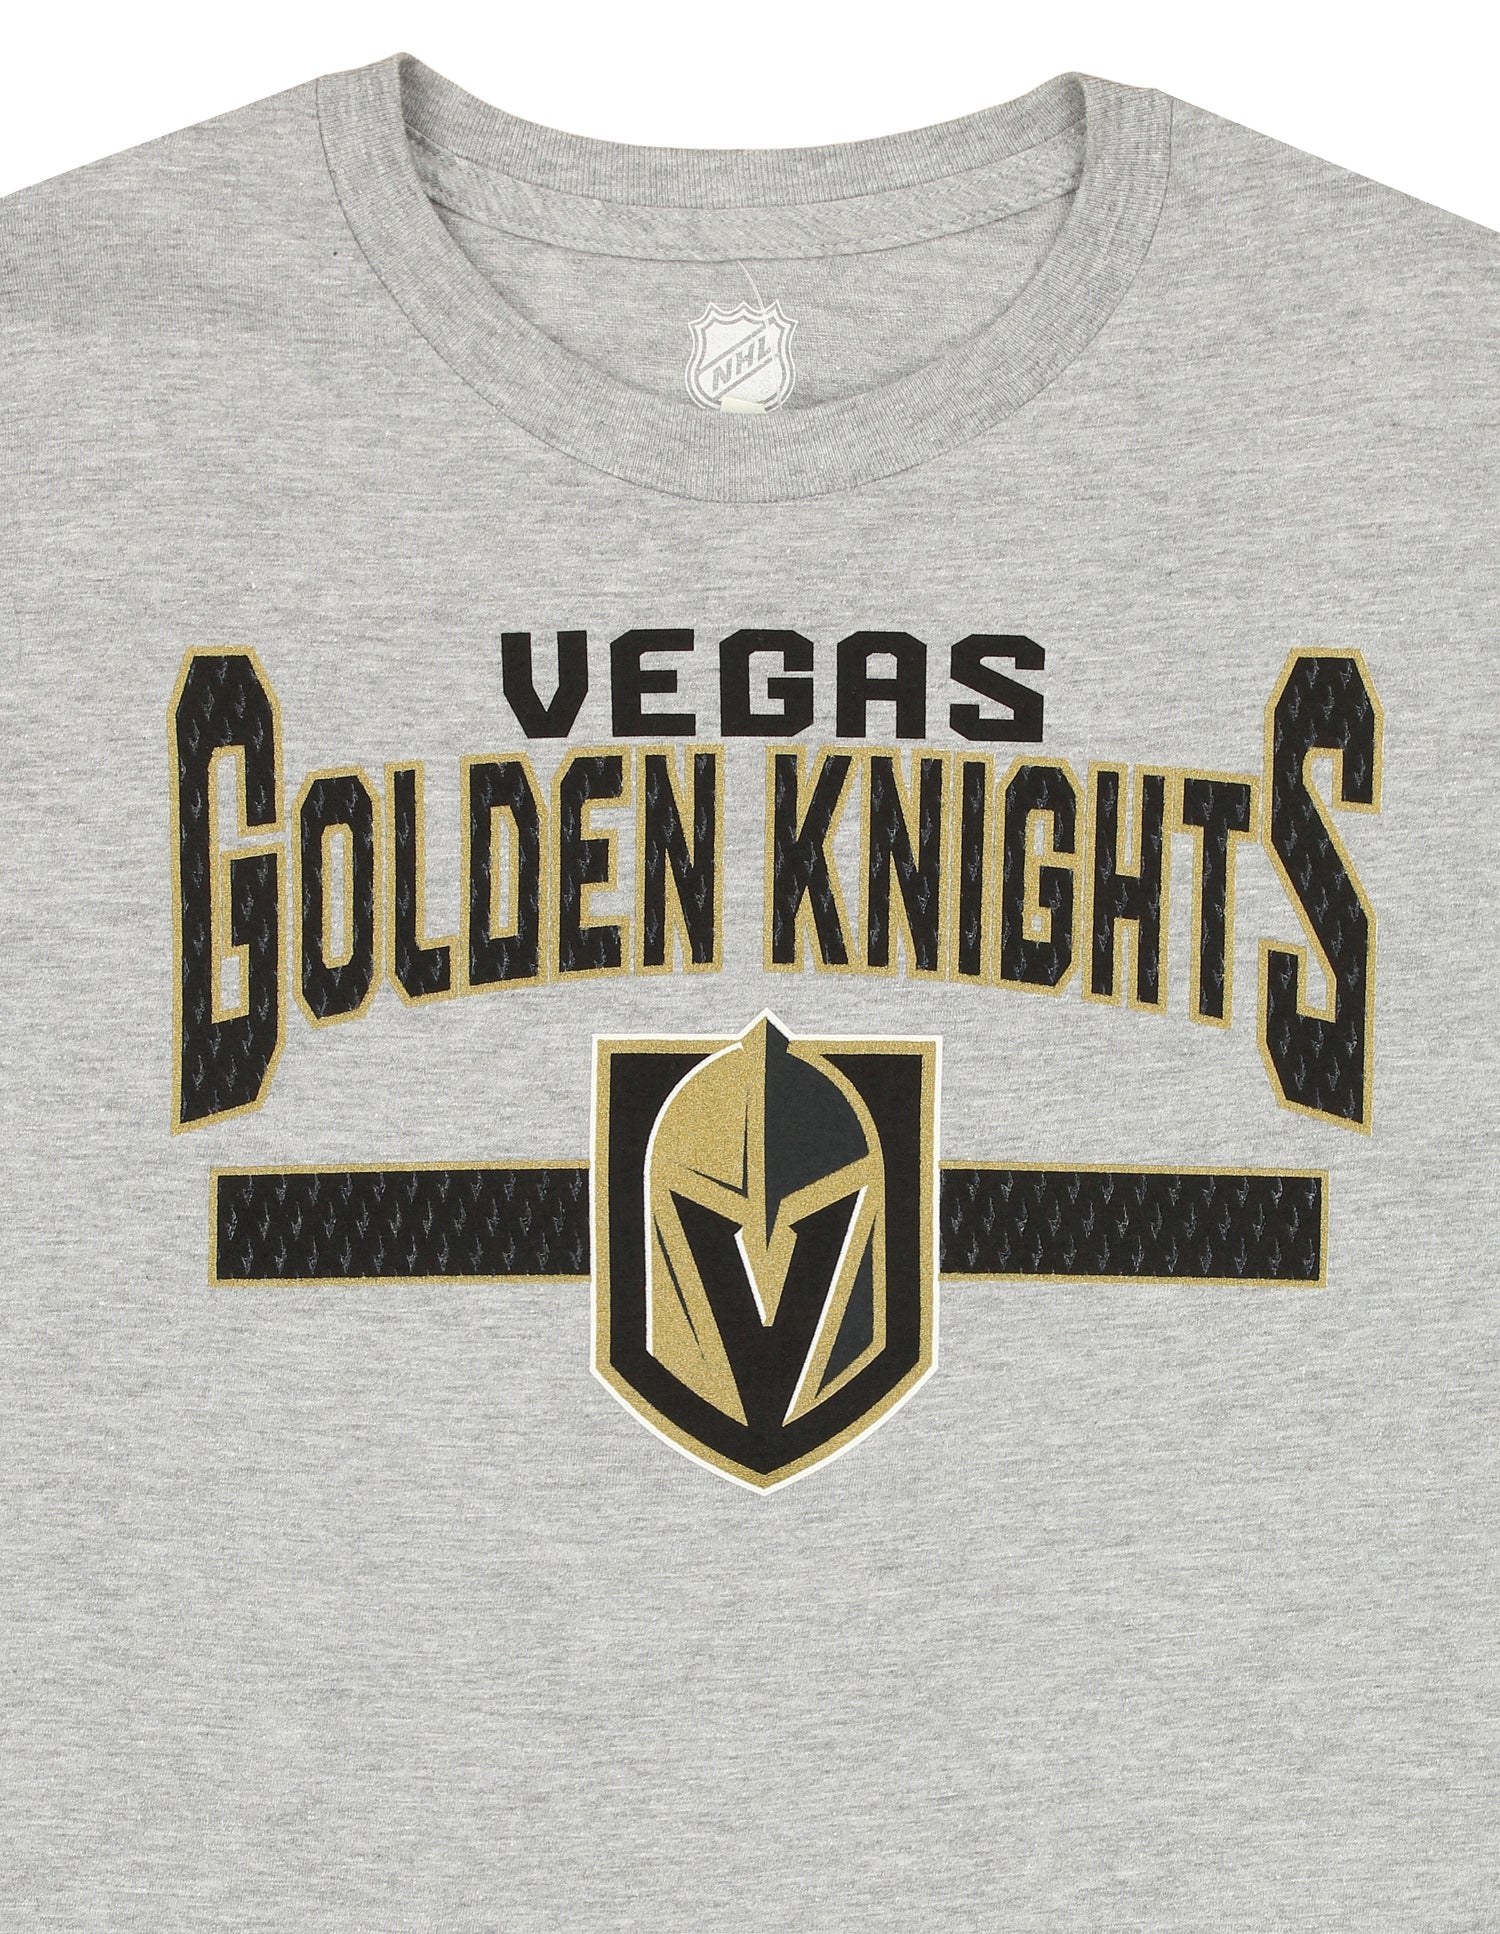 Outerstuff NHL Youth Boys Vegas Golden Knights Mesh Made Short Sleeve T-Shirt